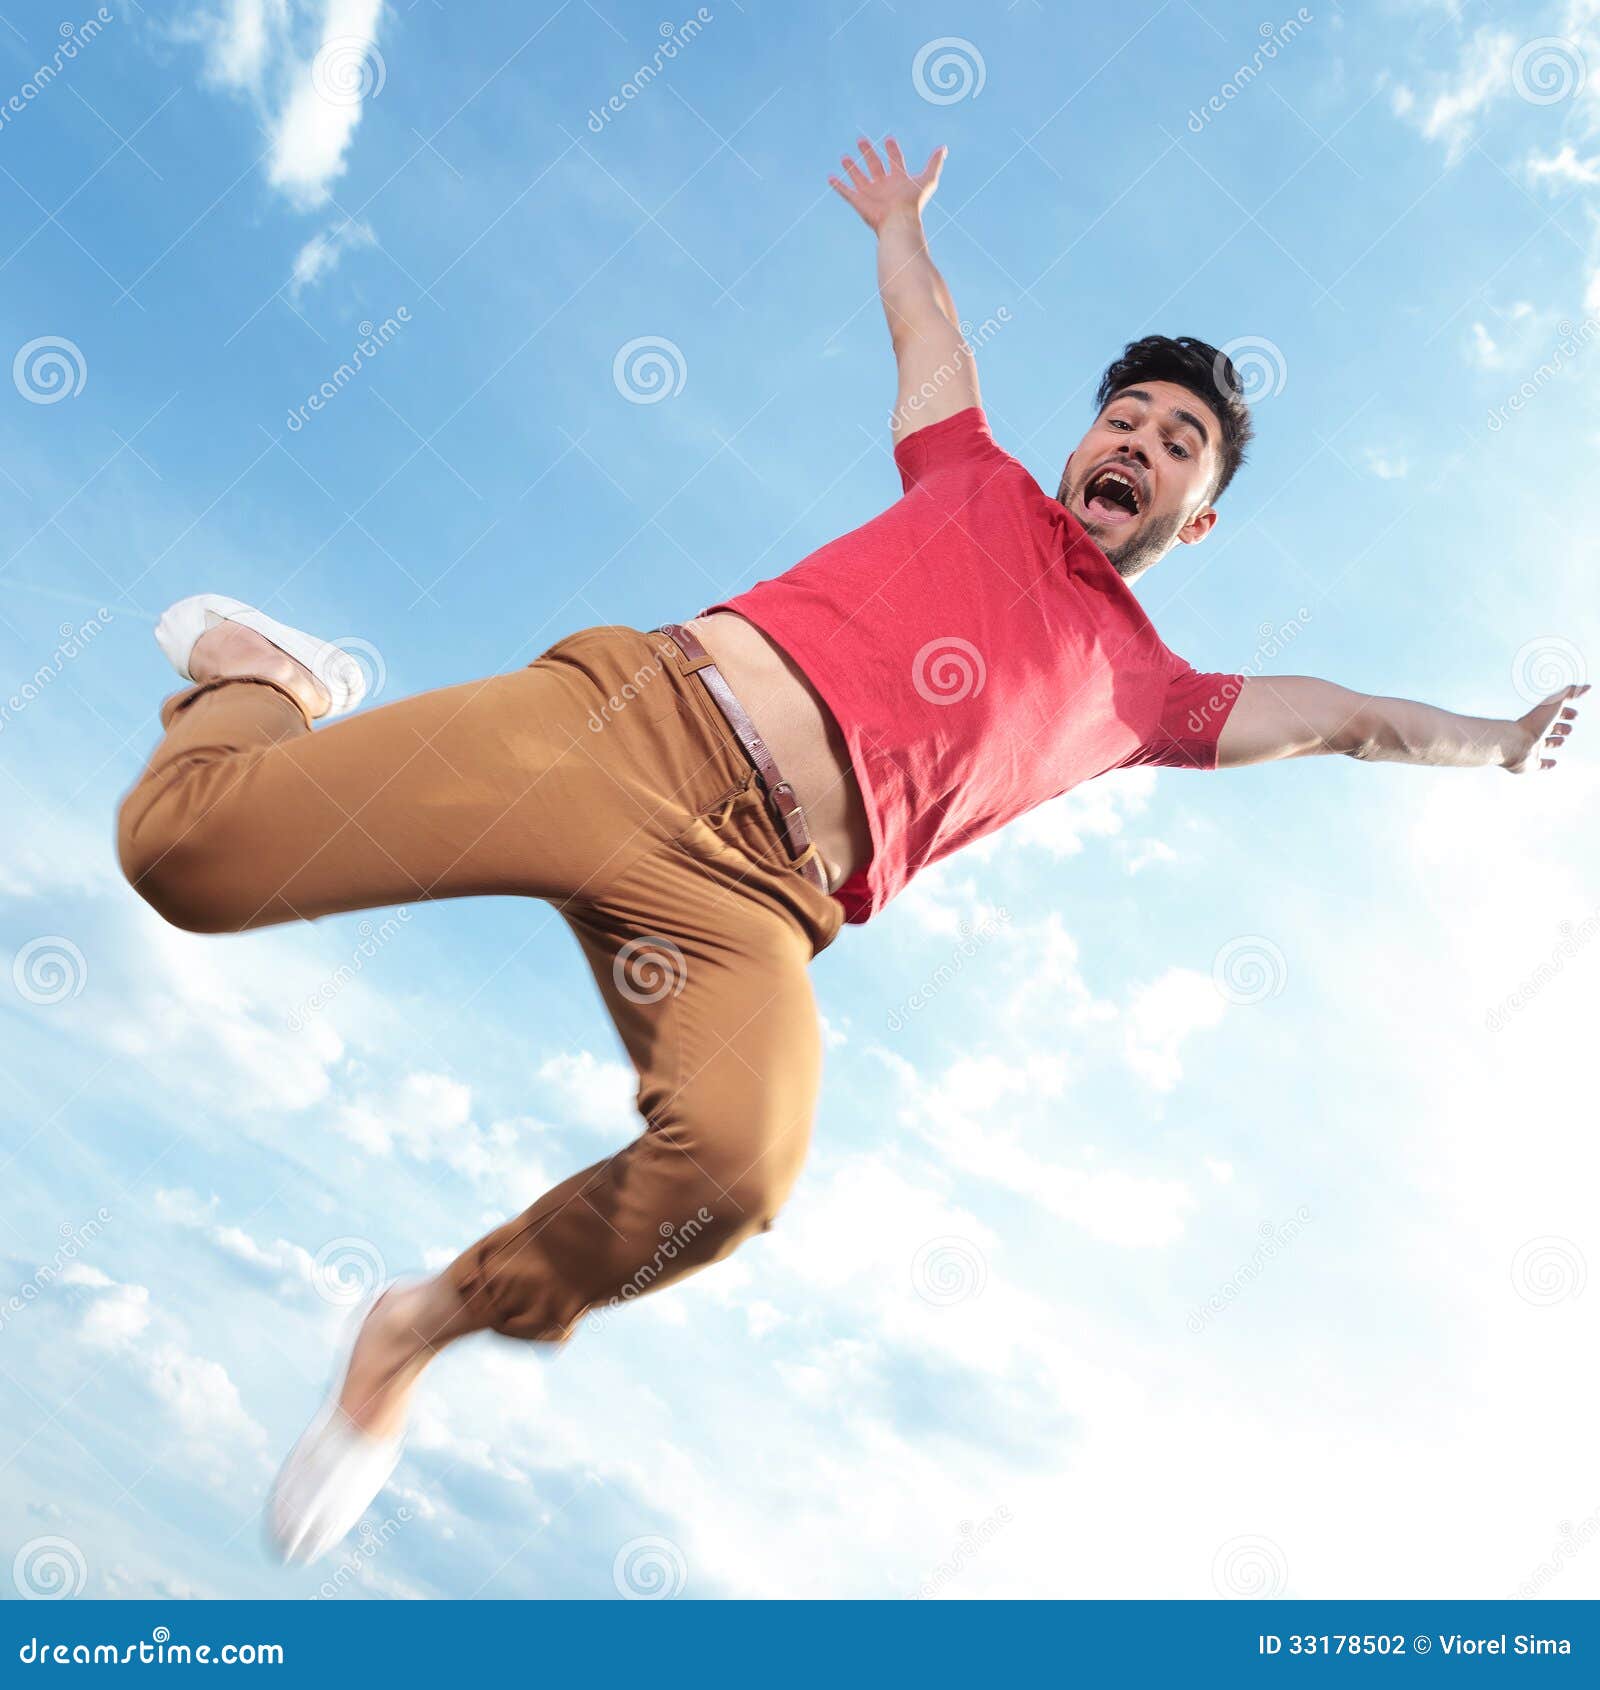 Woman Jumping Near Body of Water · Free Stock Photo